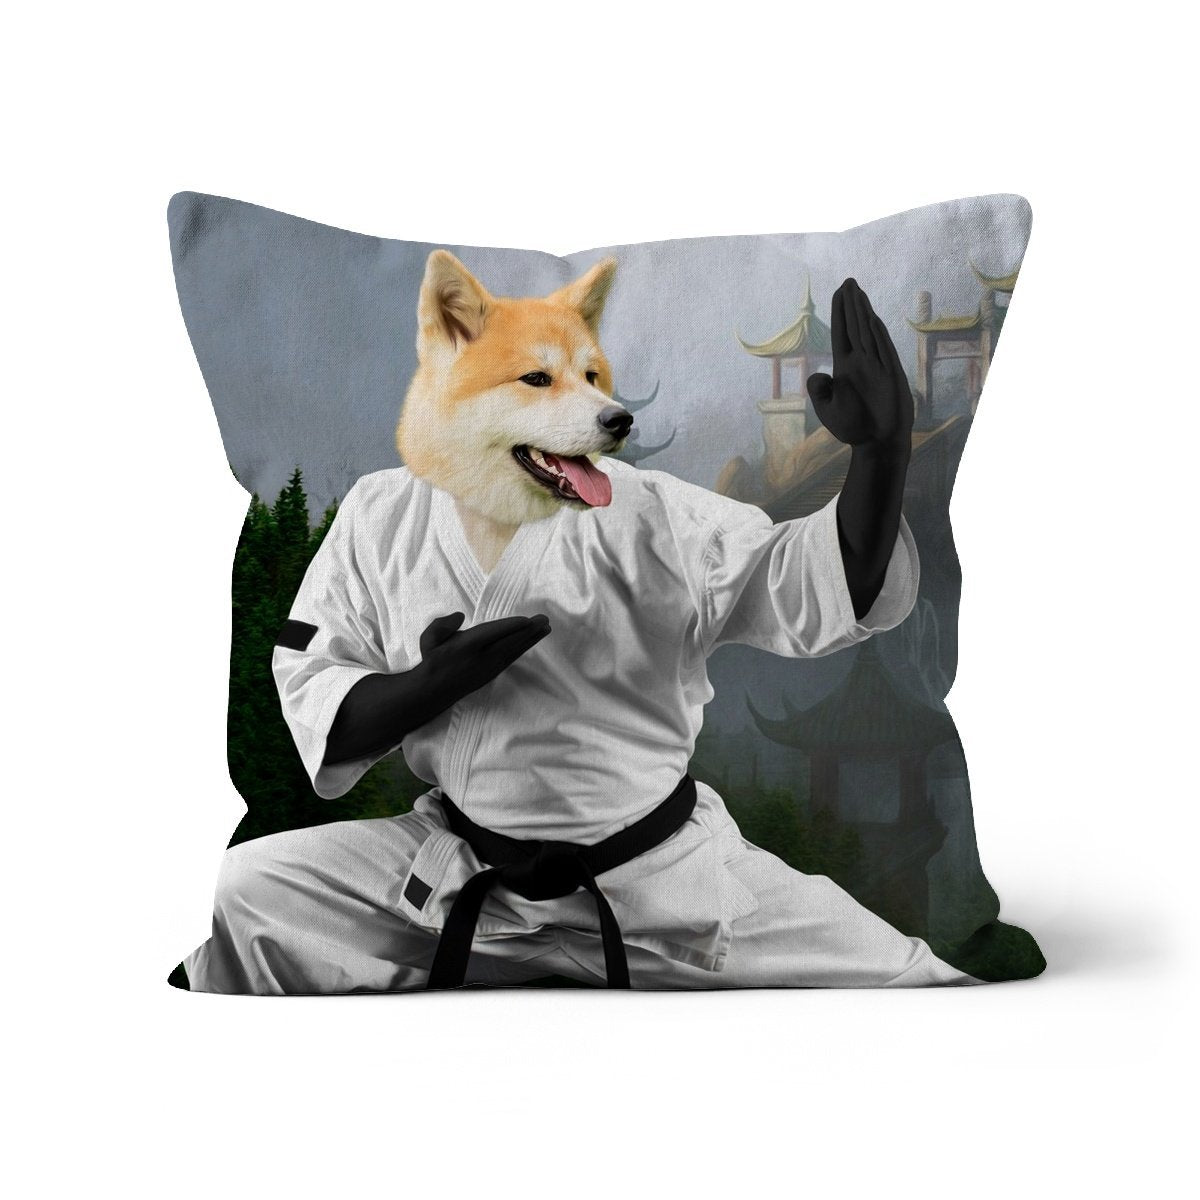 The Karate Master: Custom Pet Cushion - Paw & Glory - #pet portraits# - #dog portraits# - #pet portraits uk#paw & glory, pet portraits pillow,dog pillow custom, photo pet pillow, my pet pillow, personalised cat pillow, dog memory pillow